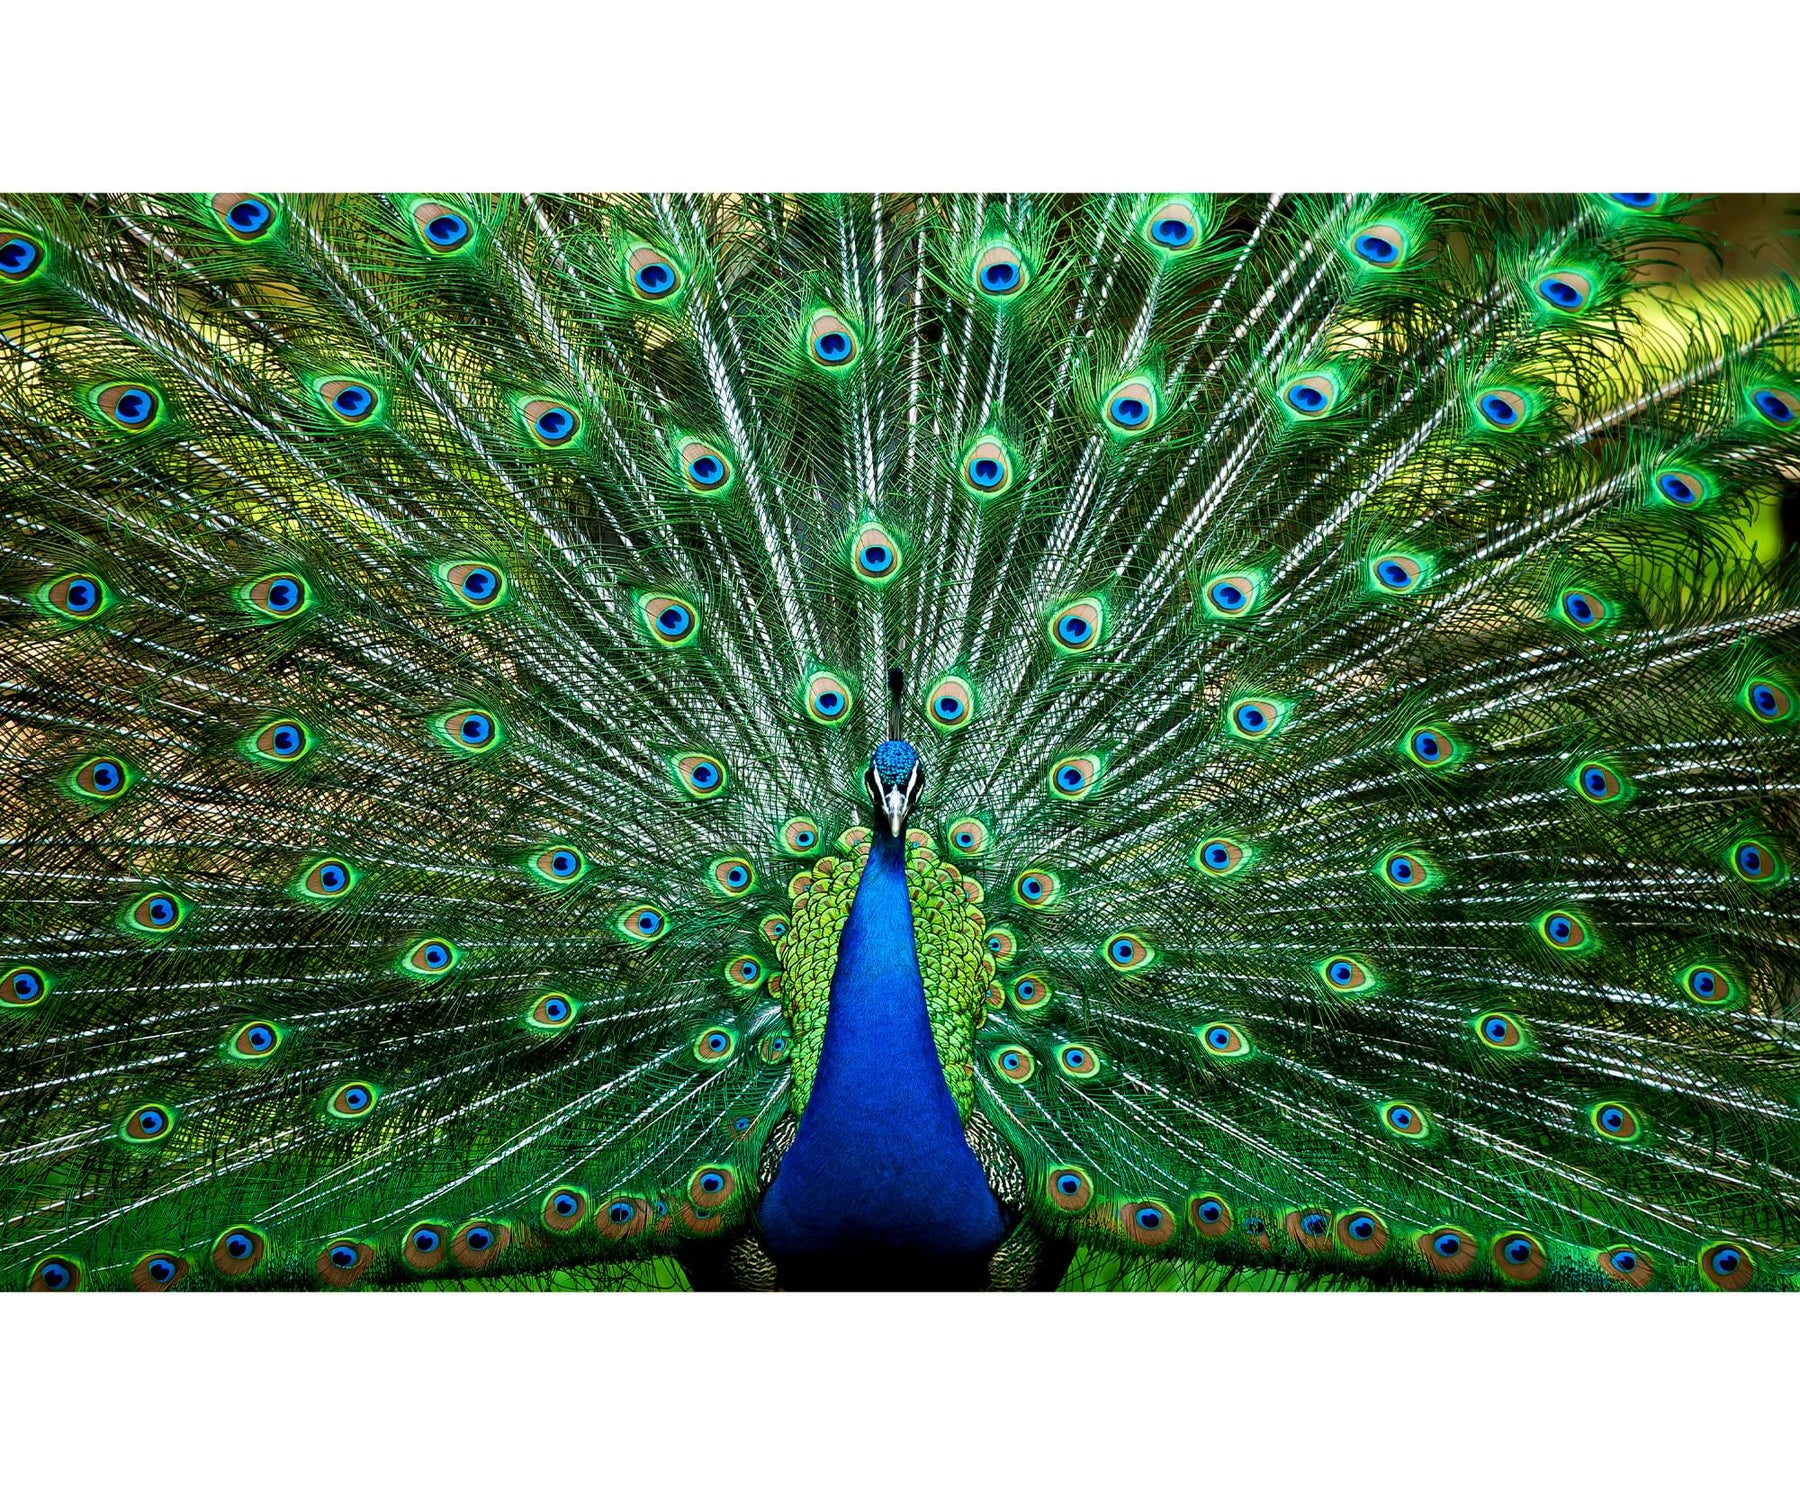 Peacock Plume Wild Zoo Animal 1000 Piece Jigsaw Puzzle